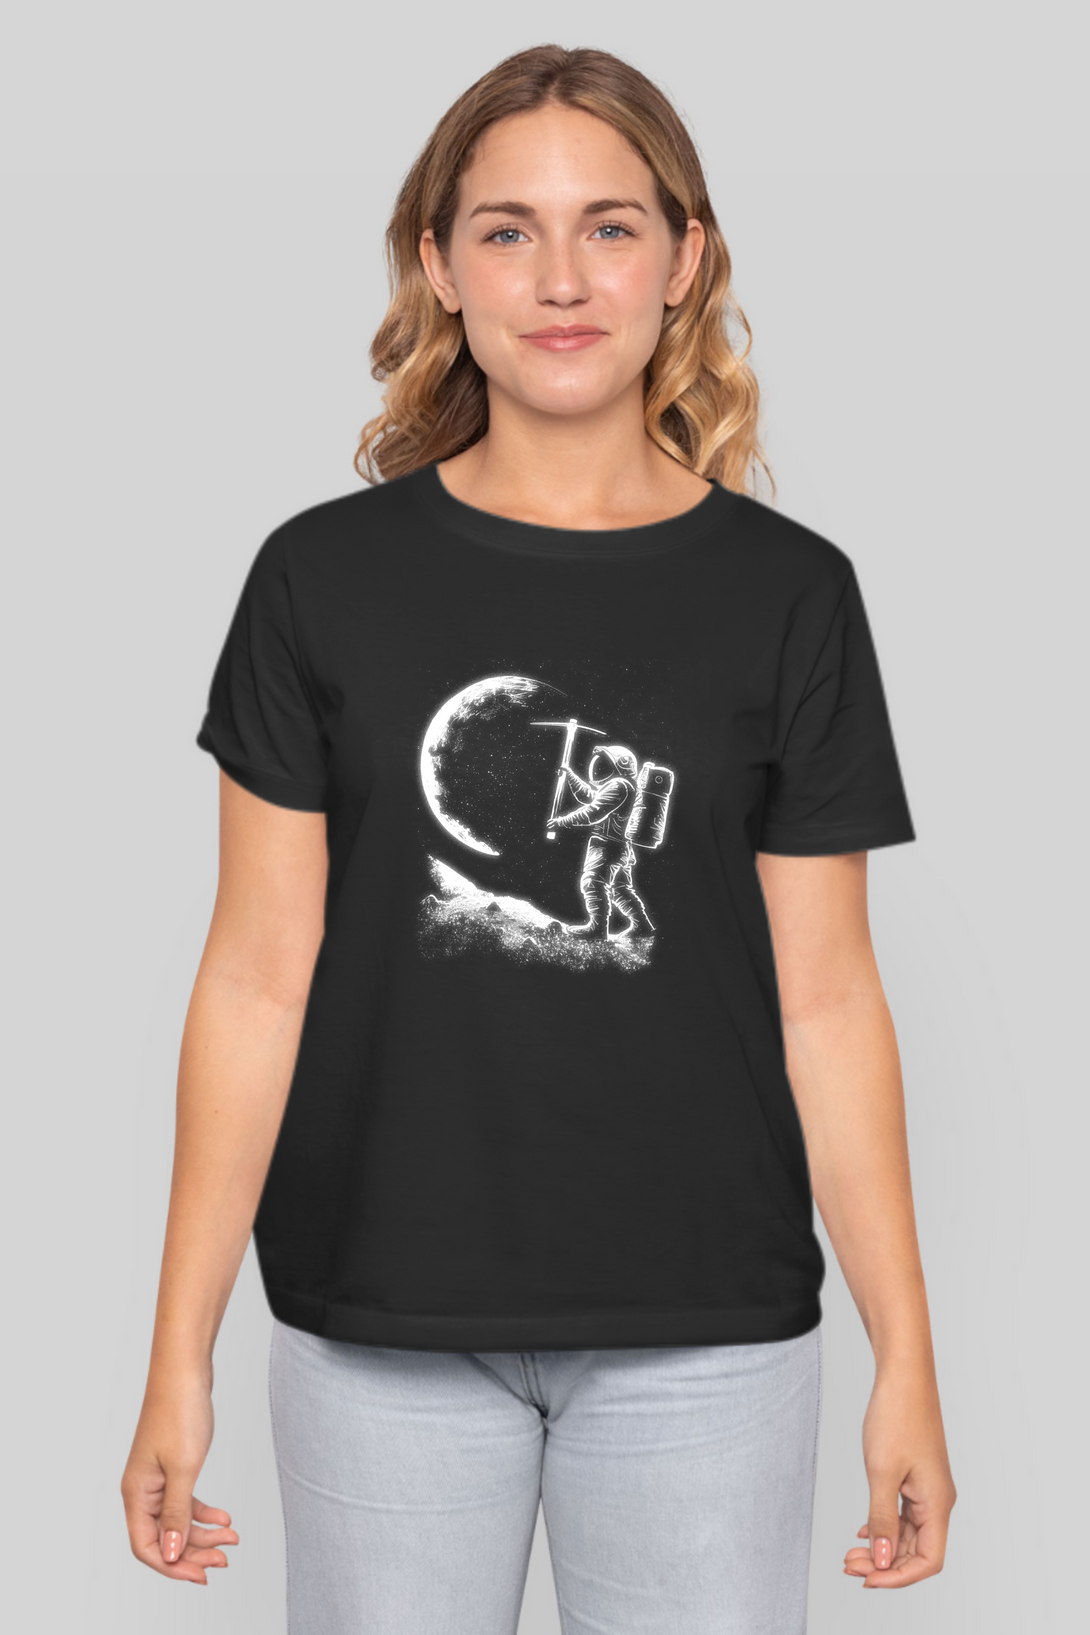 Astro-Lunar Printed T-Shirt For Women - WowWaves - 9